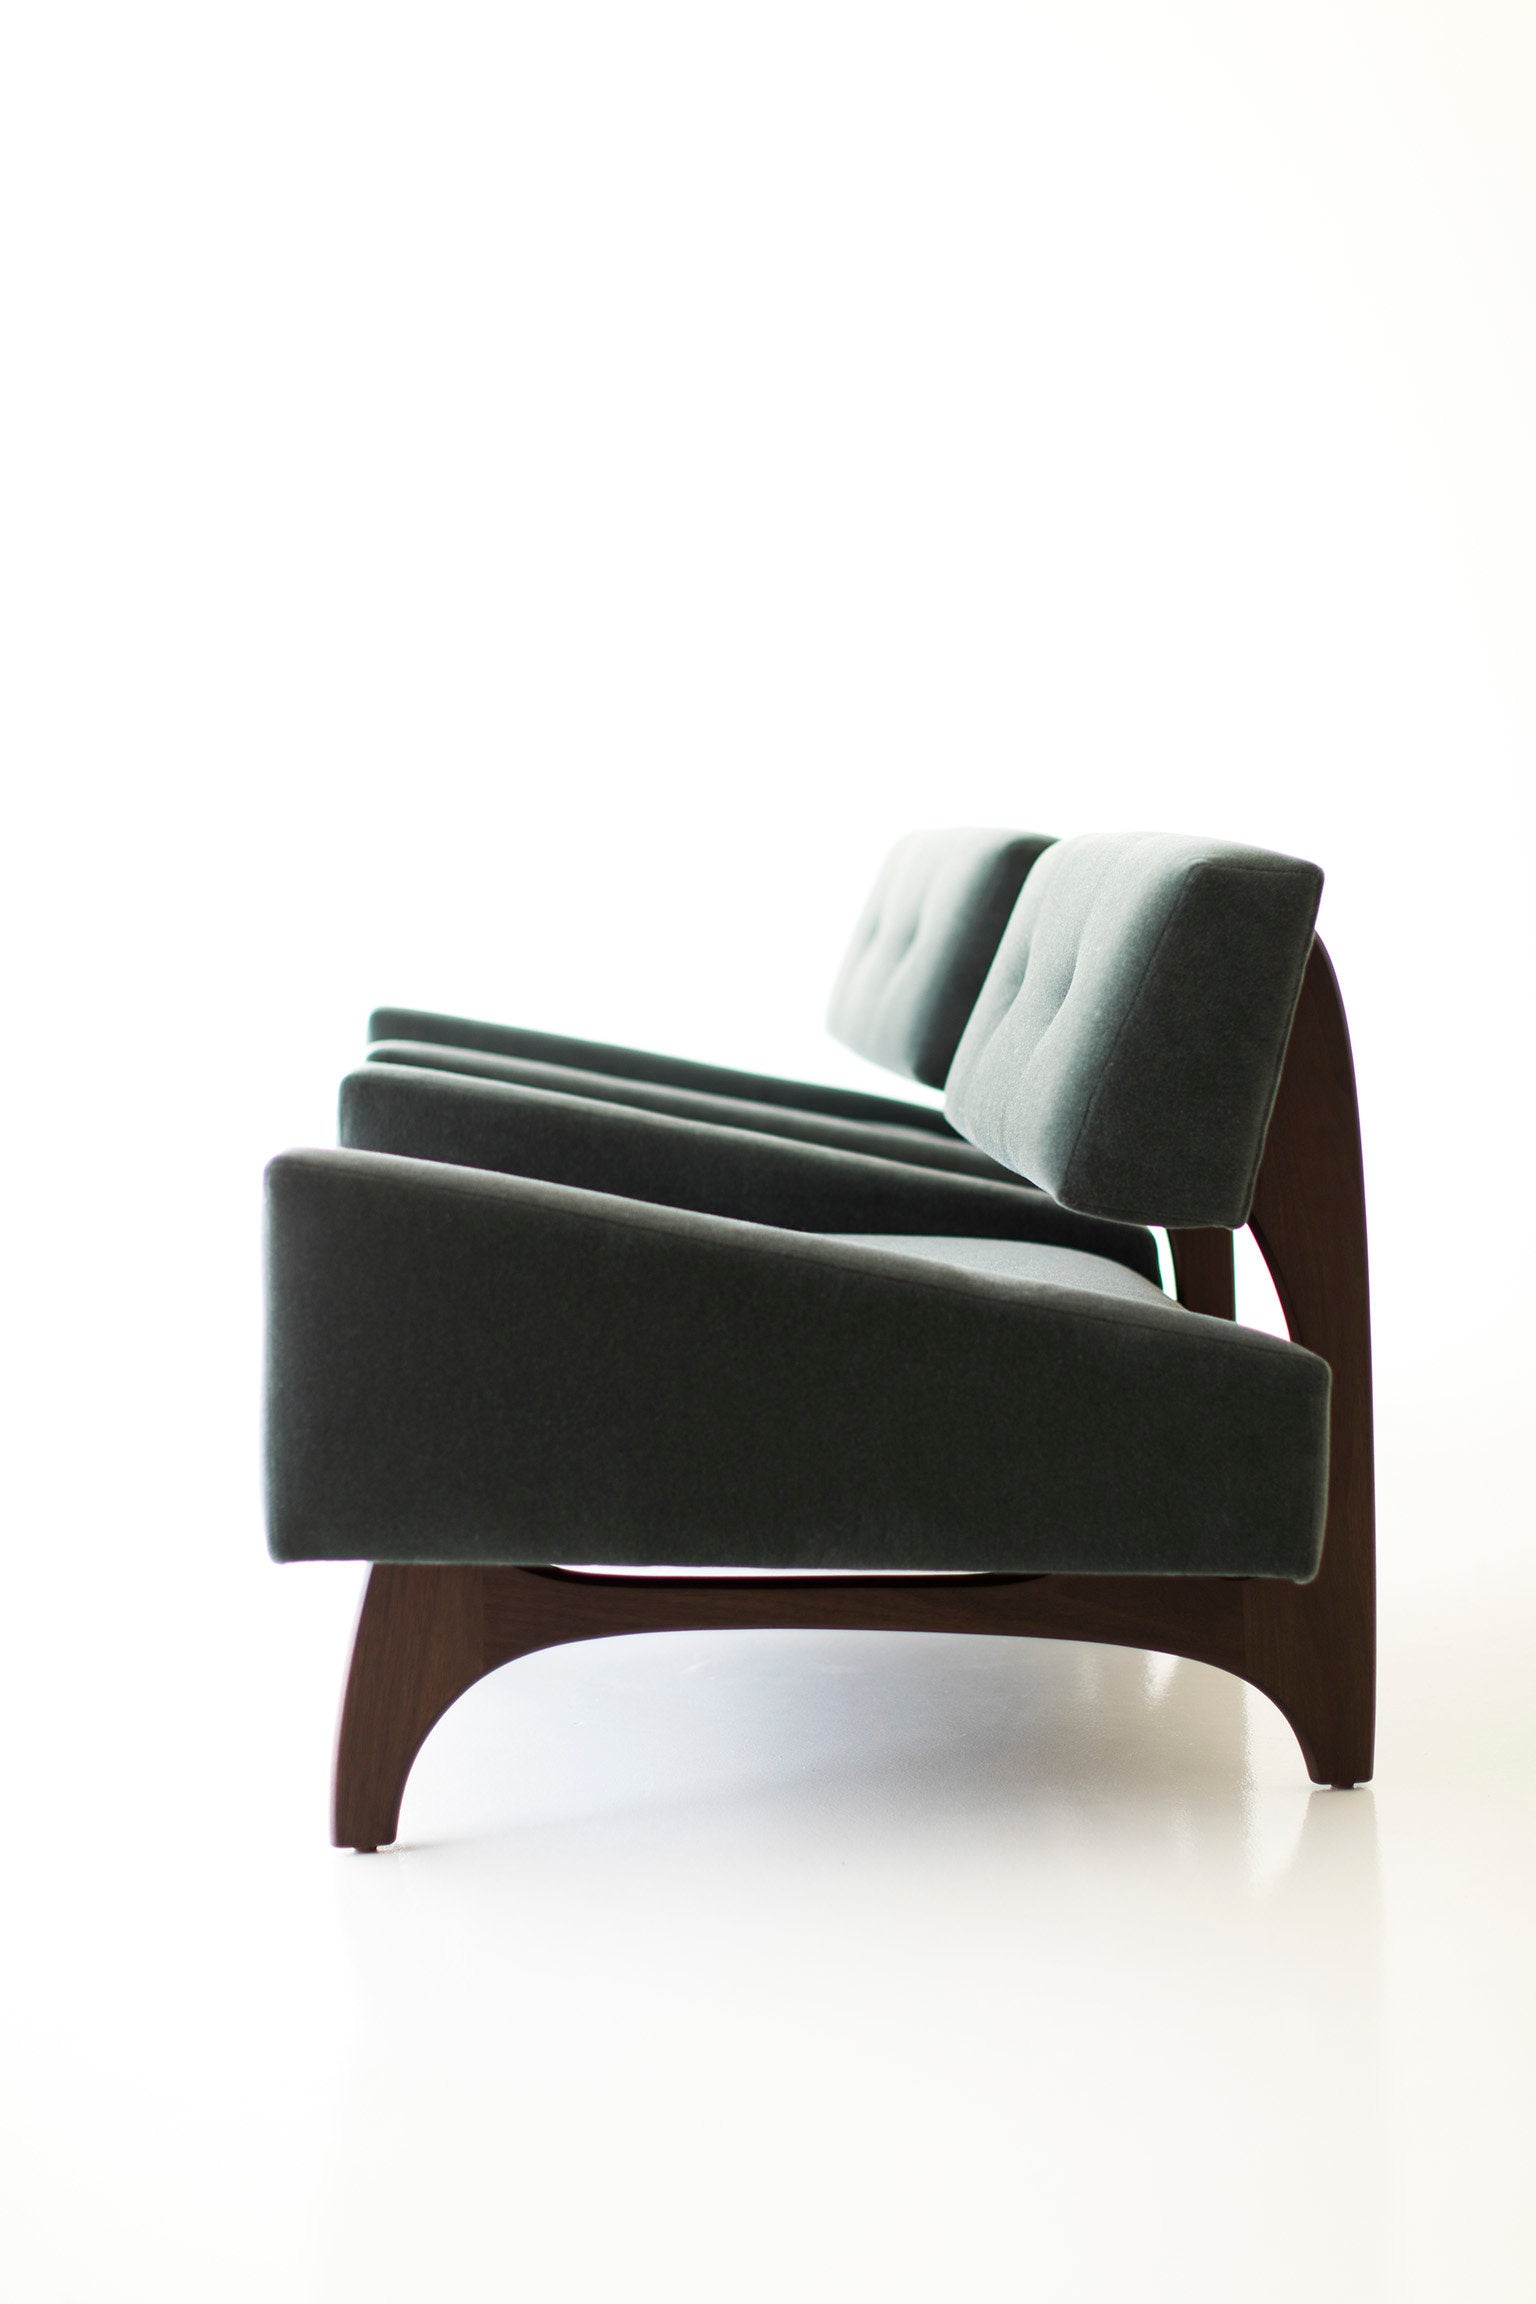 craft-associates-lounge-chairs-1519-01